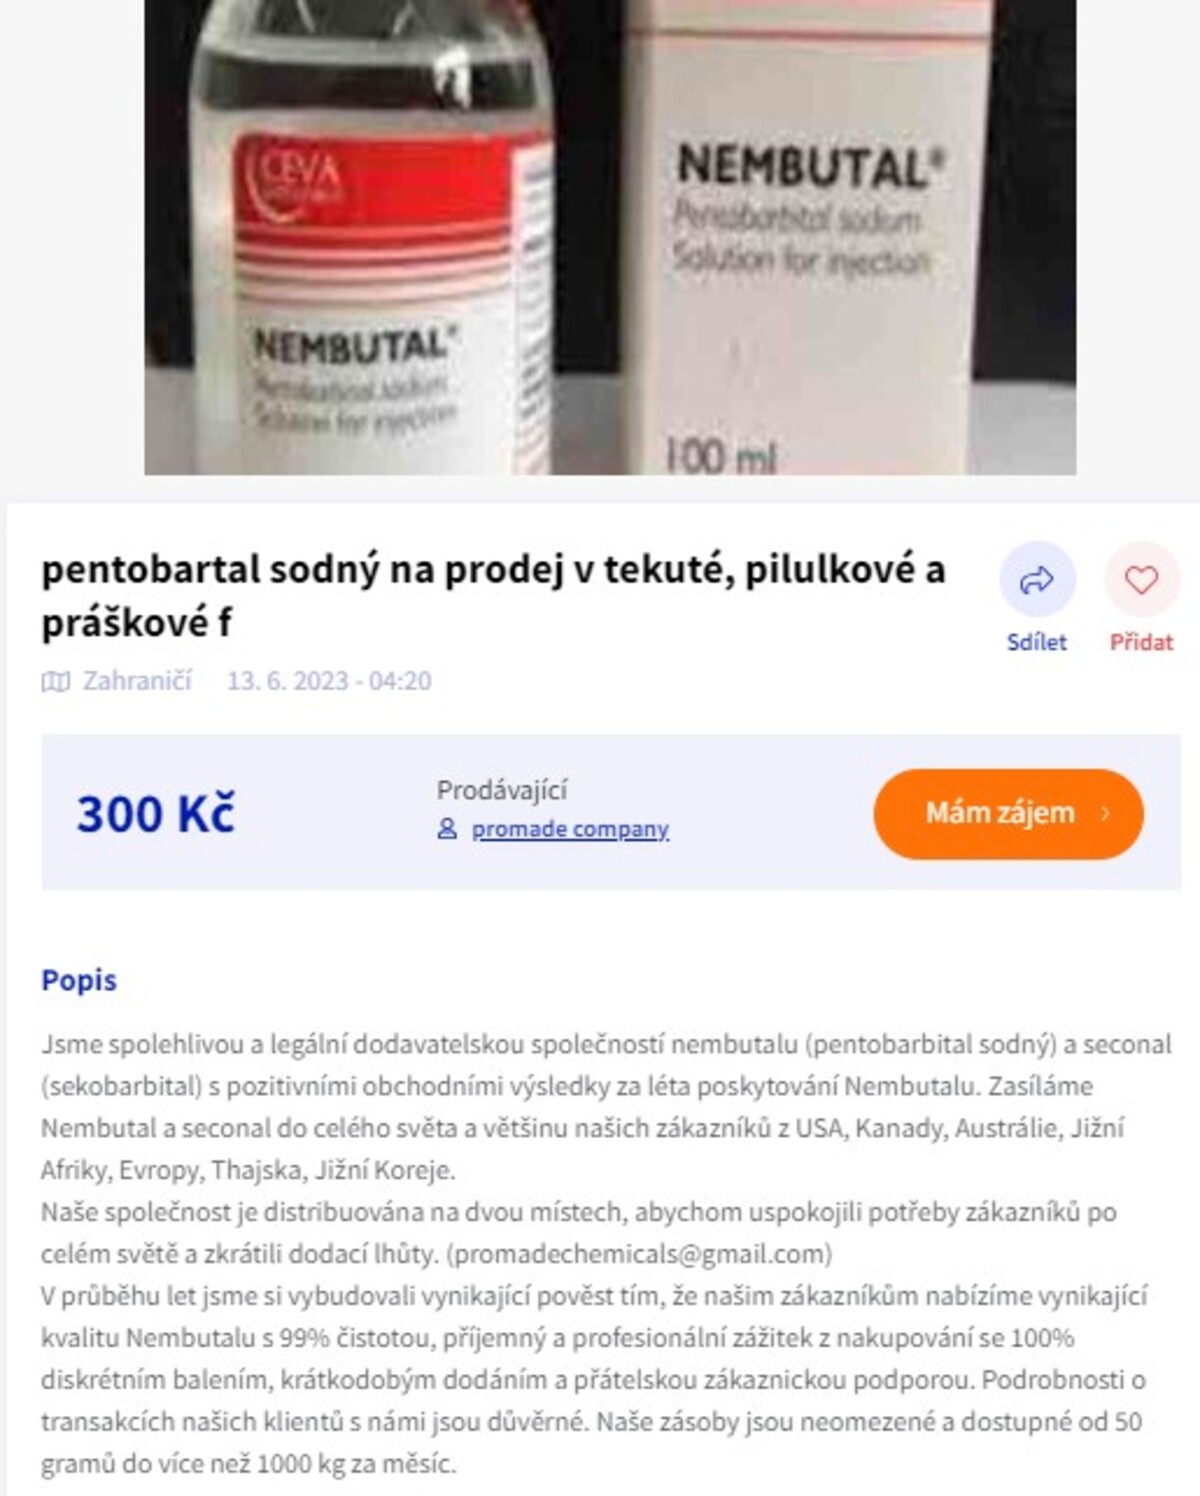 Ukázka inzerátu na webu Hyperinzerce.cz.